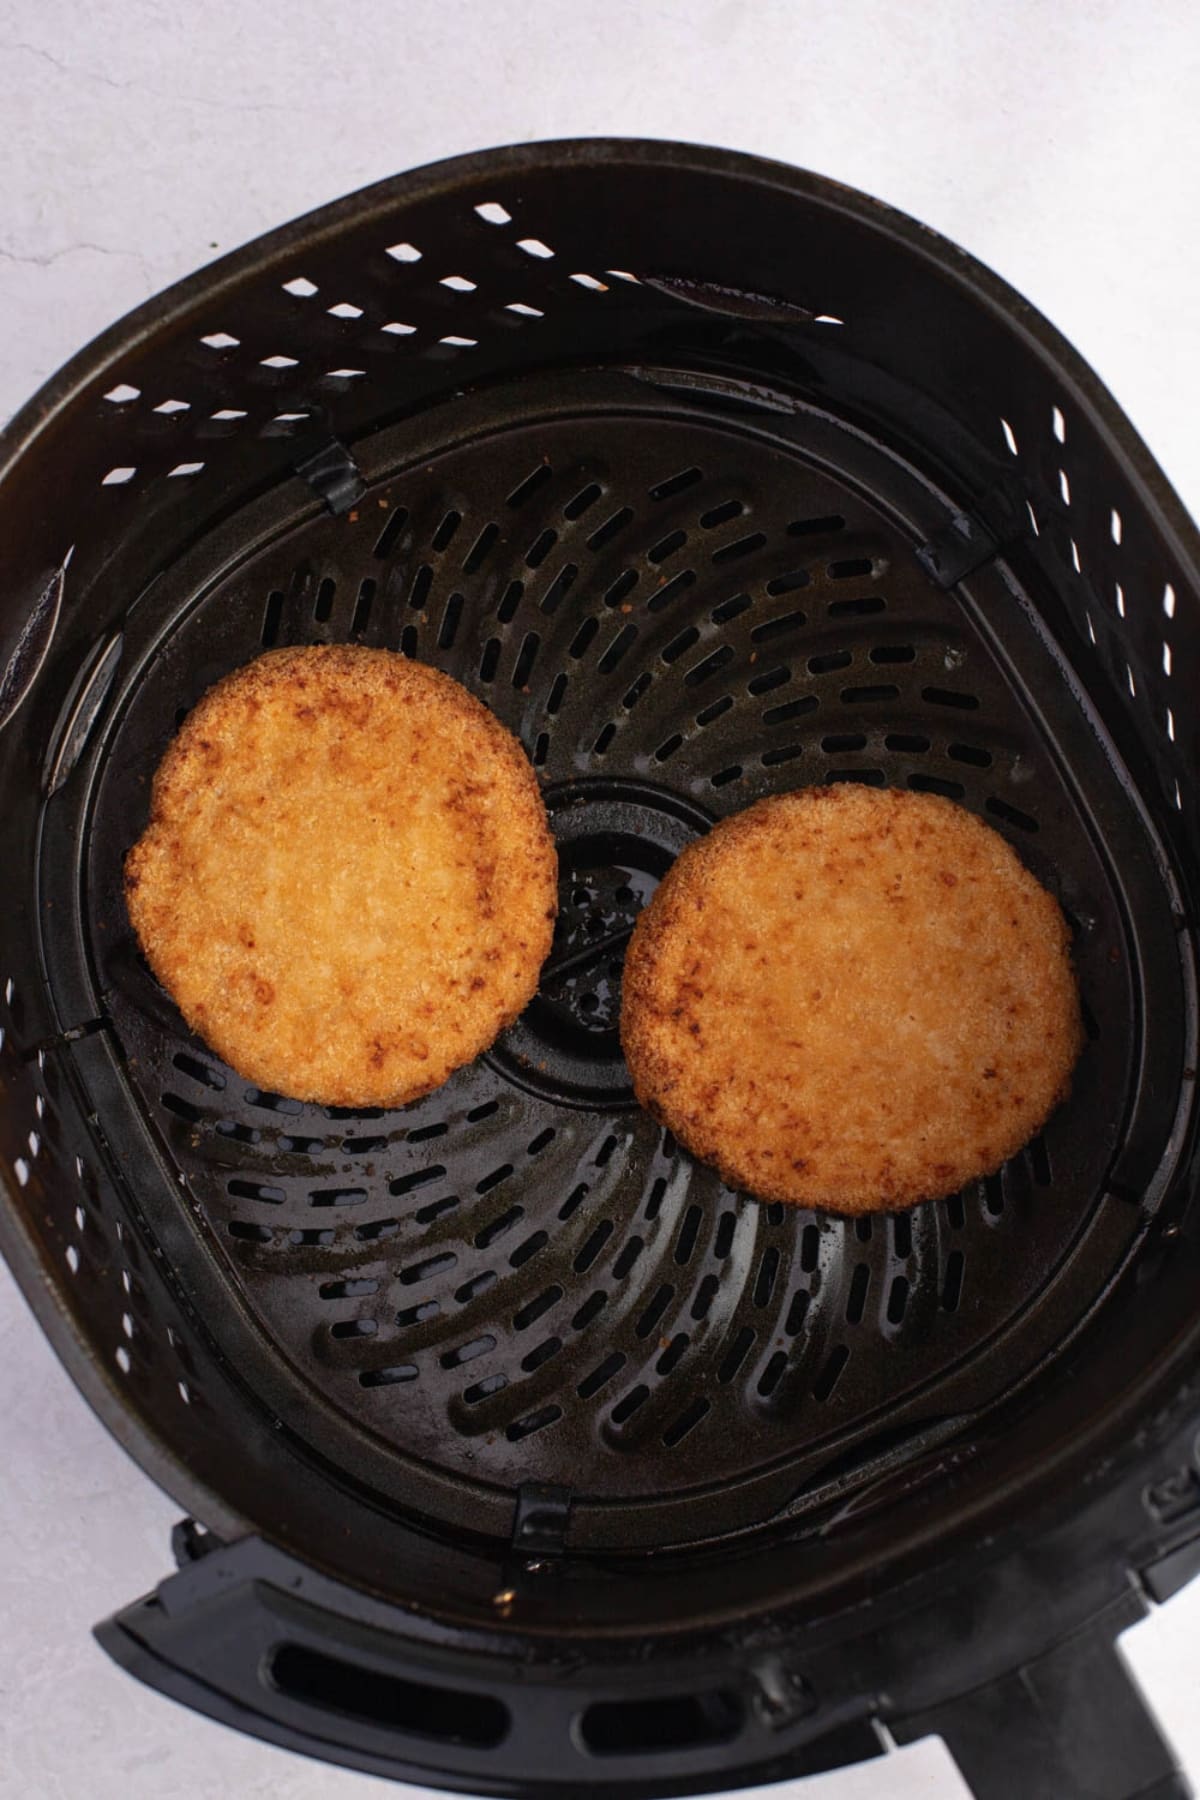 Two Tyson chicken patties in an air fryer